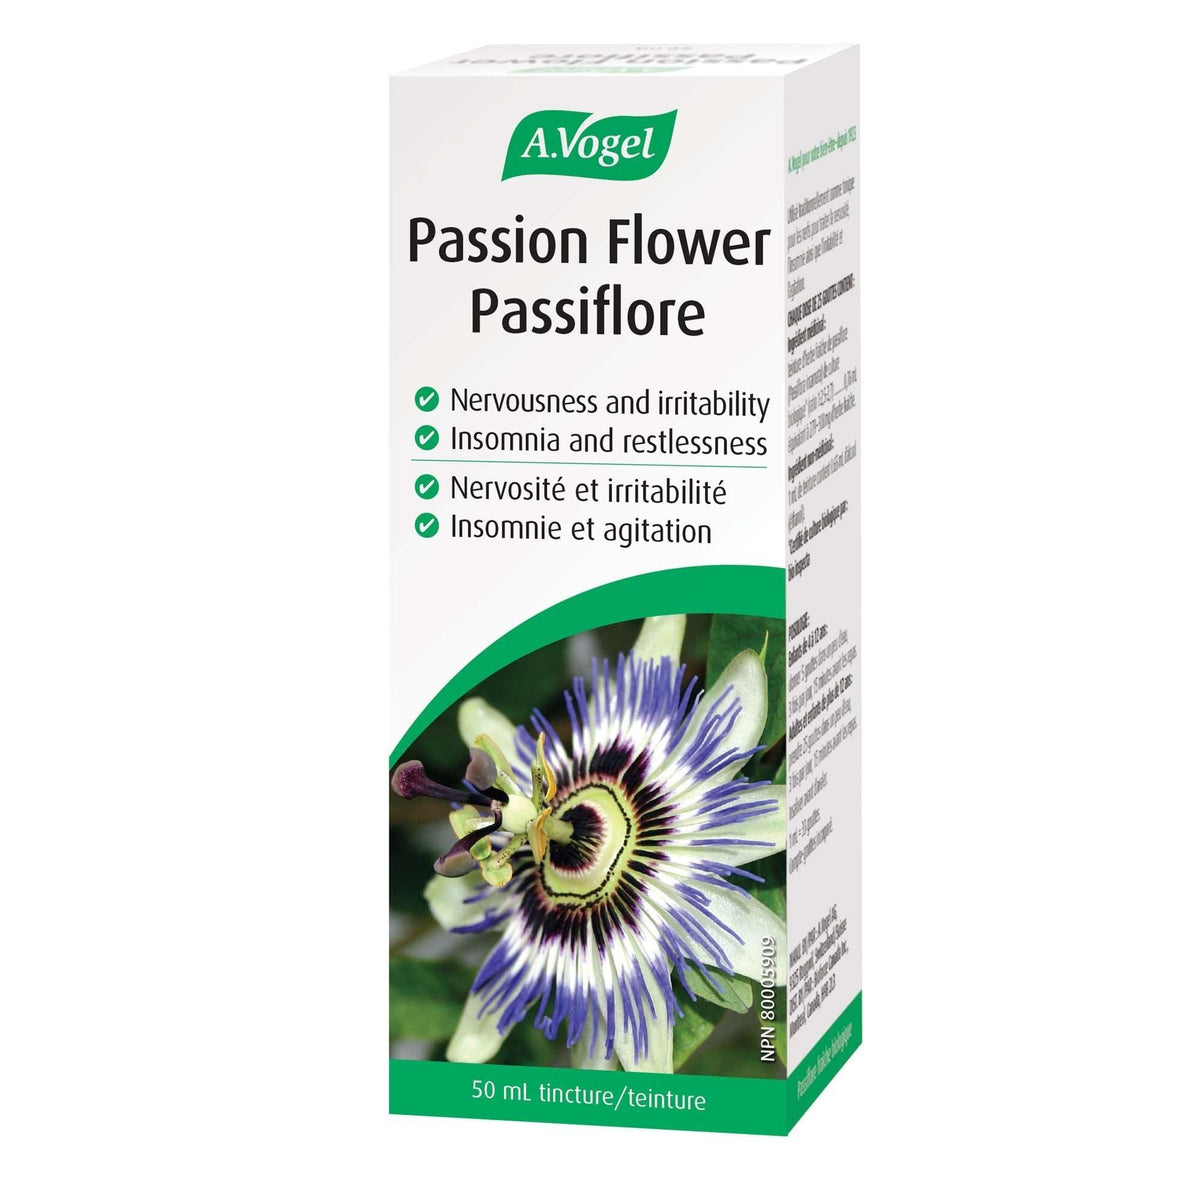 A. Vogel Passion Flower 50mL Supplements - Stress at Village Vitamin Store